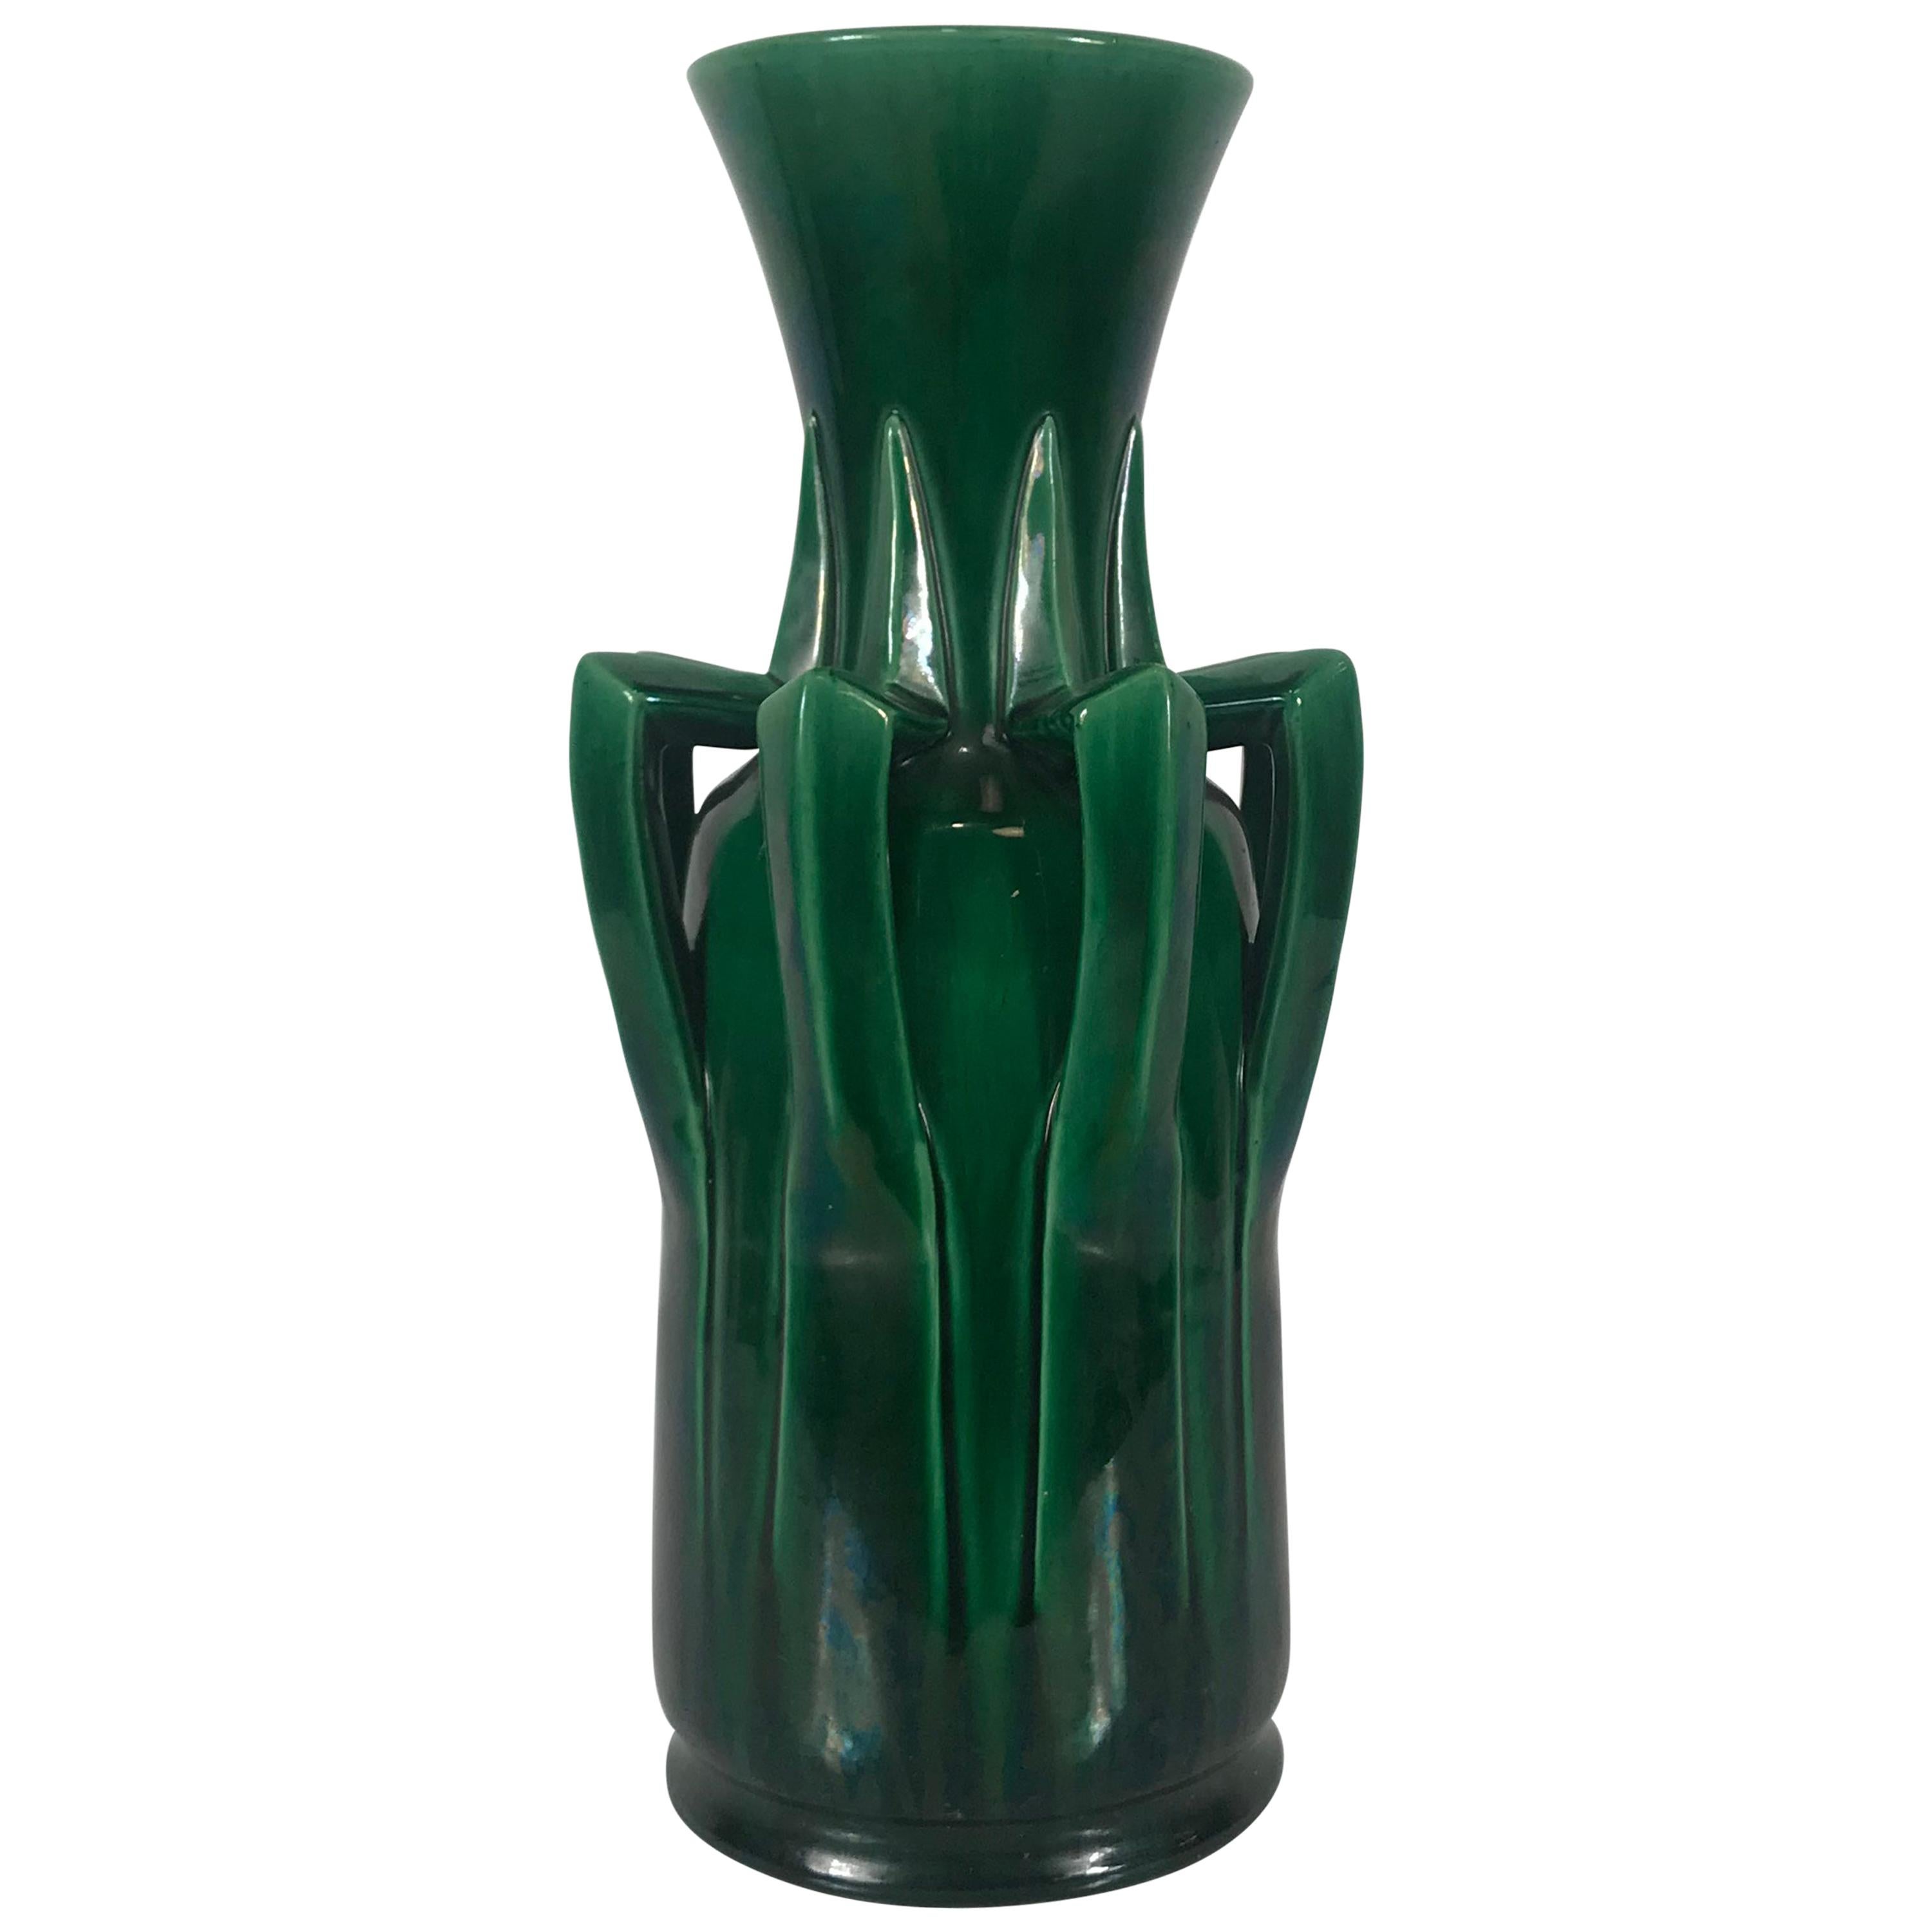 Unusual Awaji Pottery Architectural Arts & Crafts Green Monochrome Vase